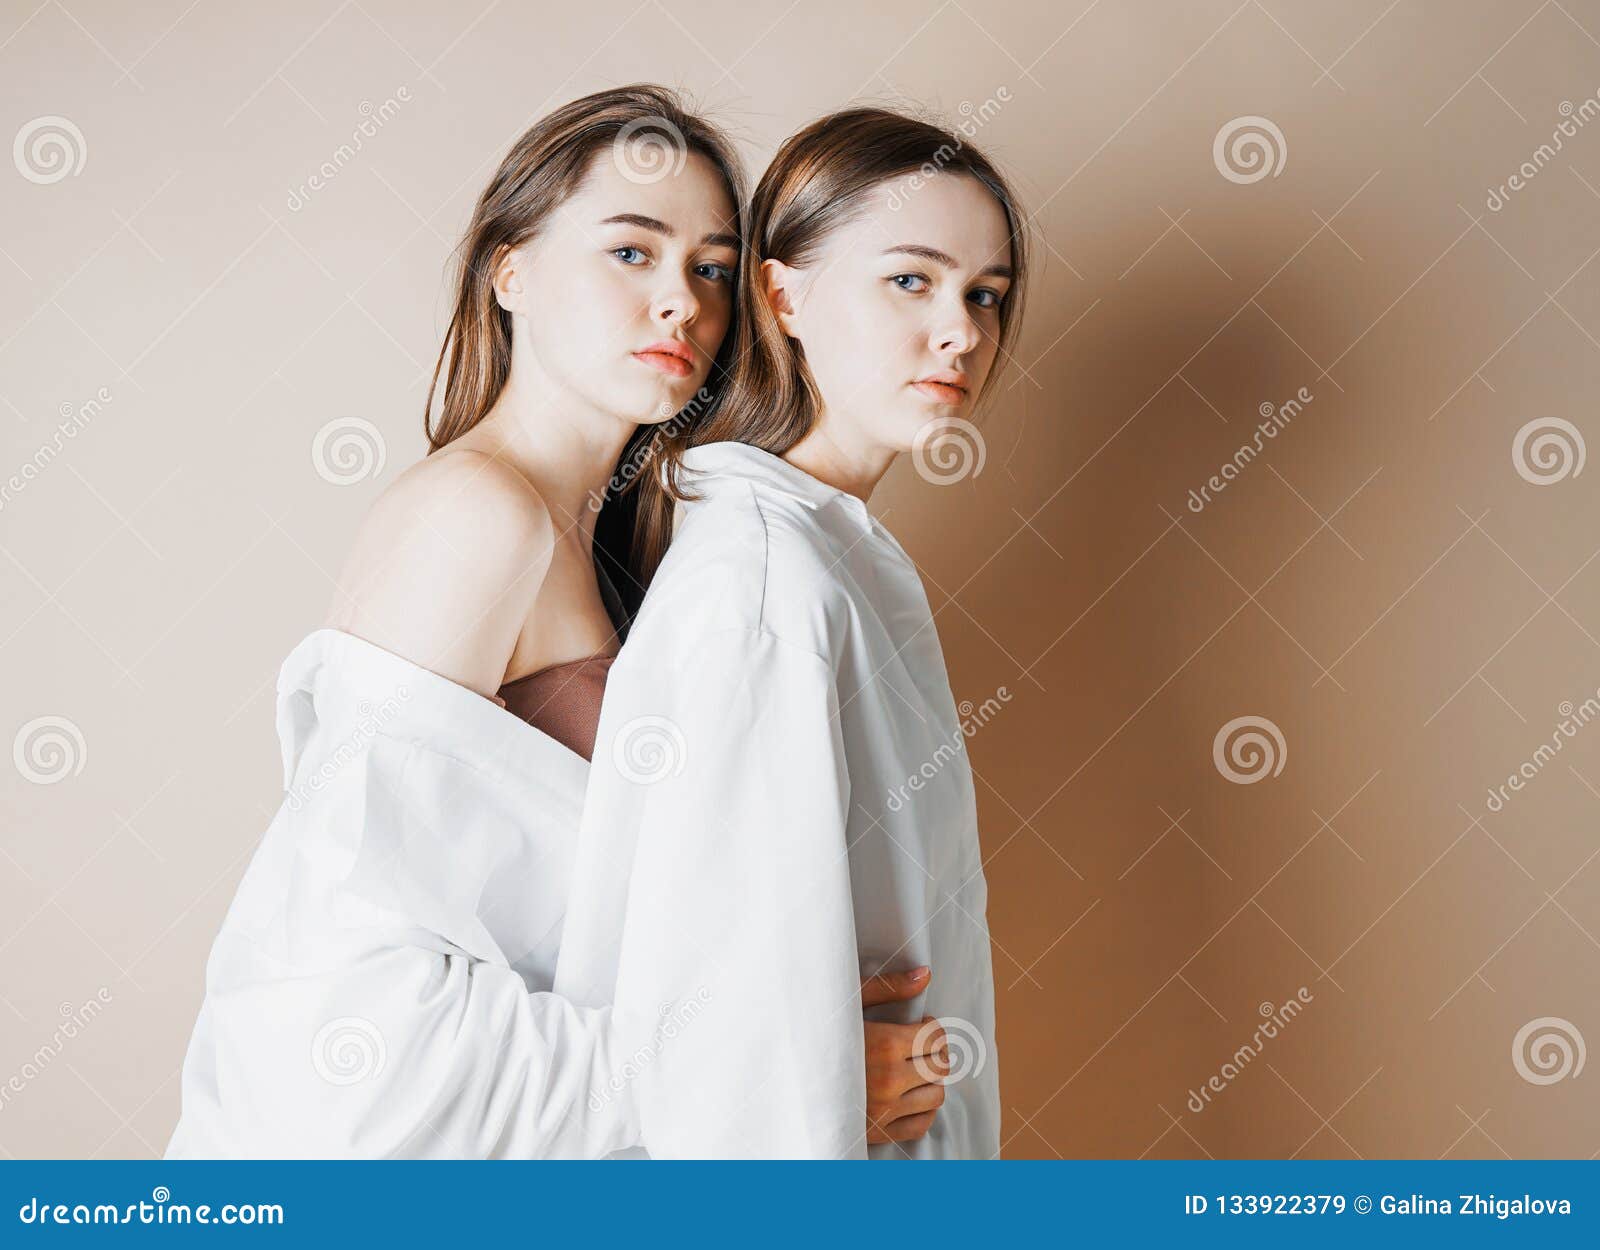 deux filles adolescentes nue